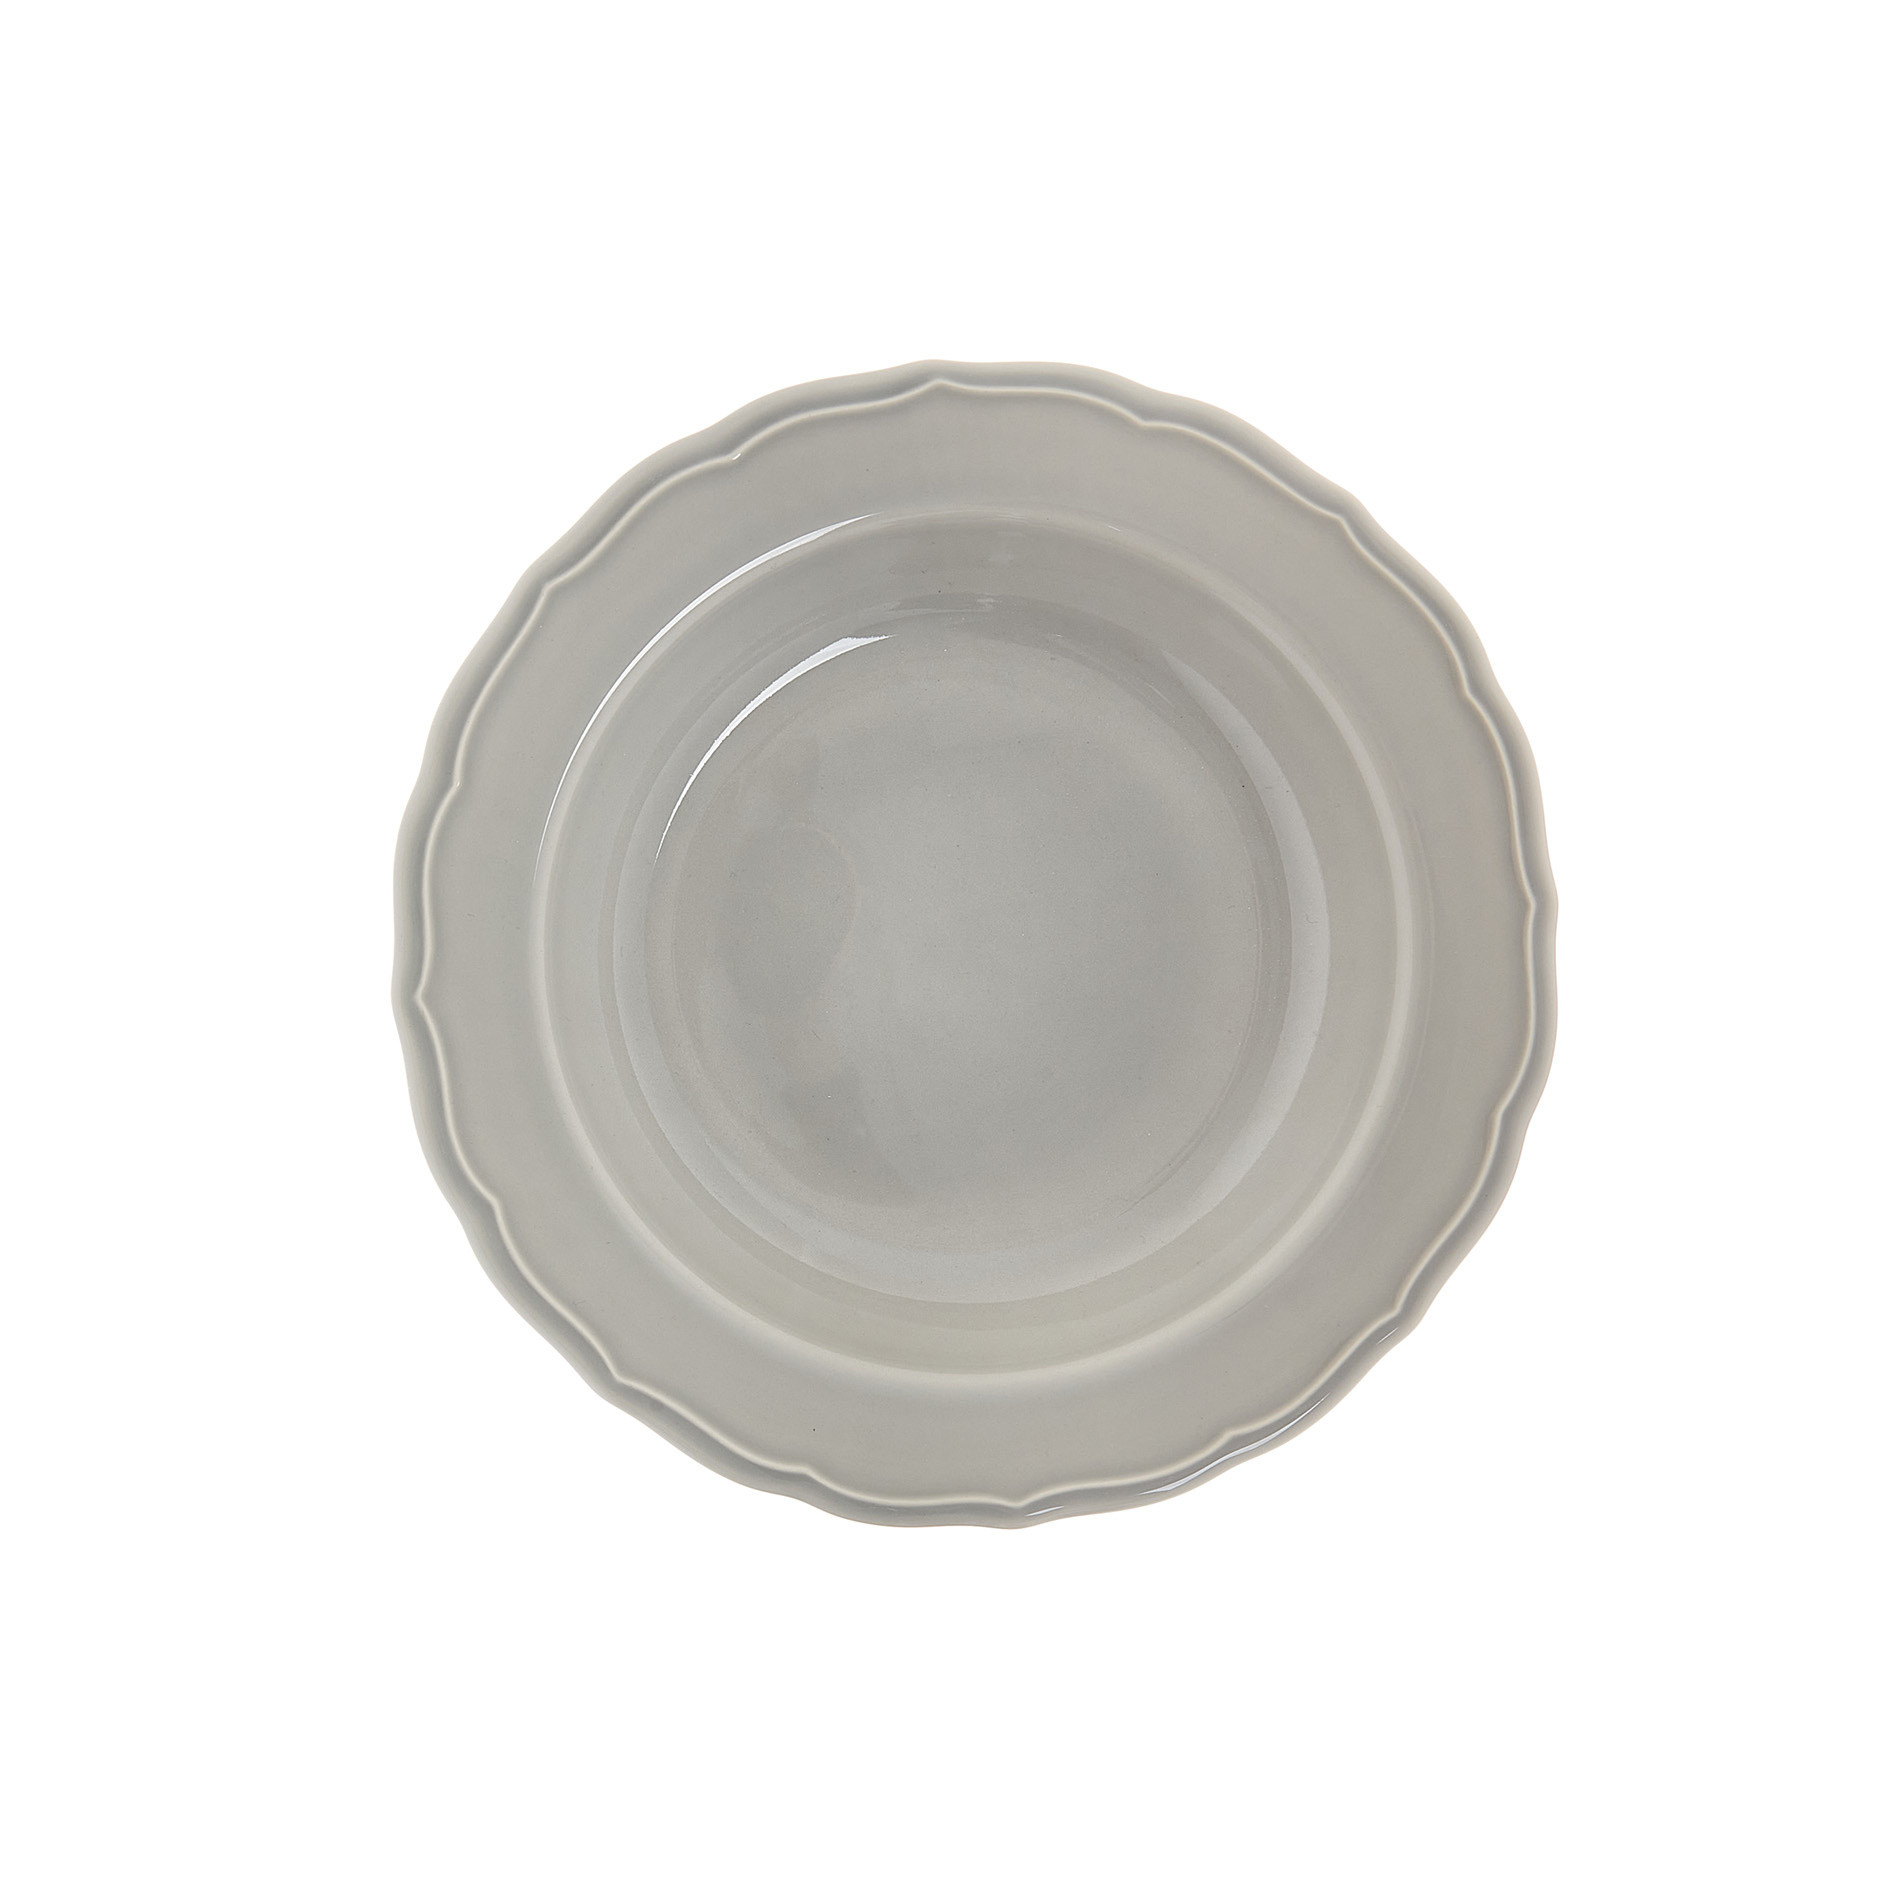 Dona Maria ceramic soup bowl, Grey, large image number 1